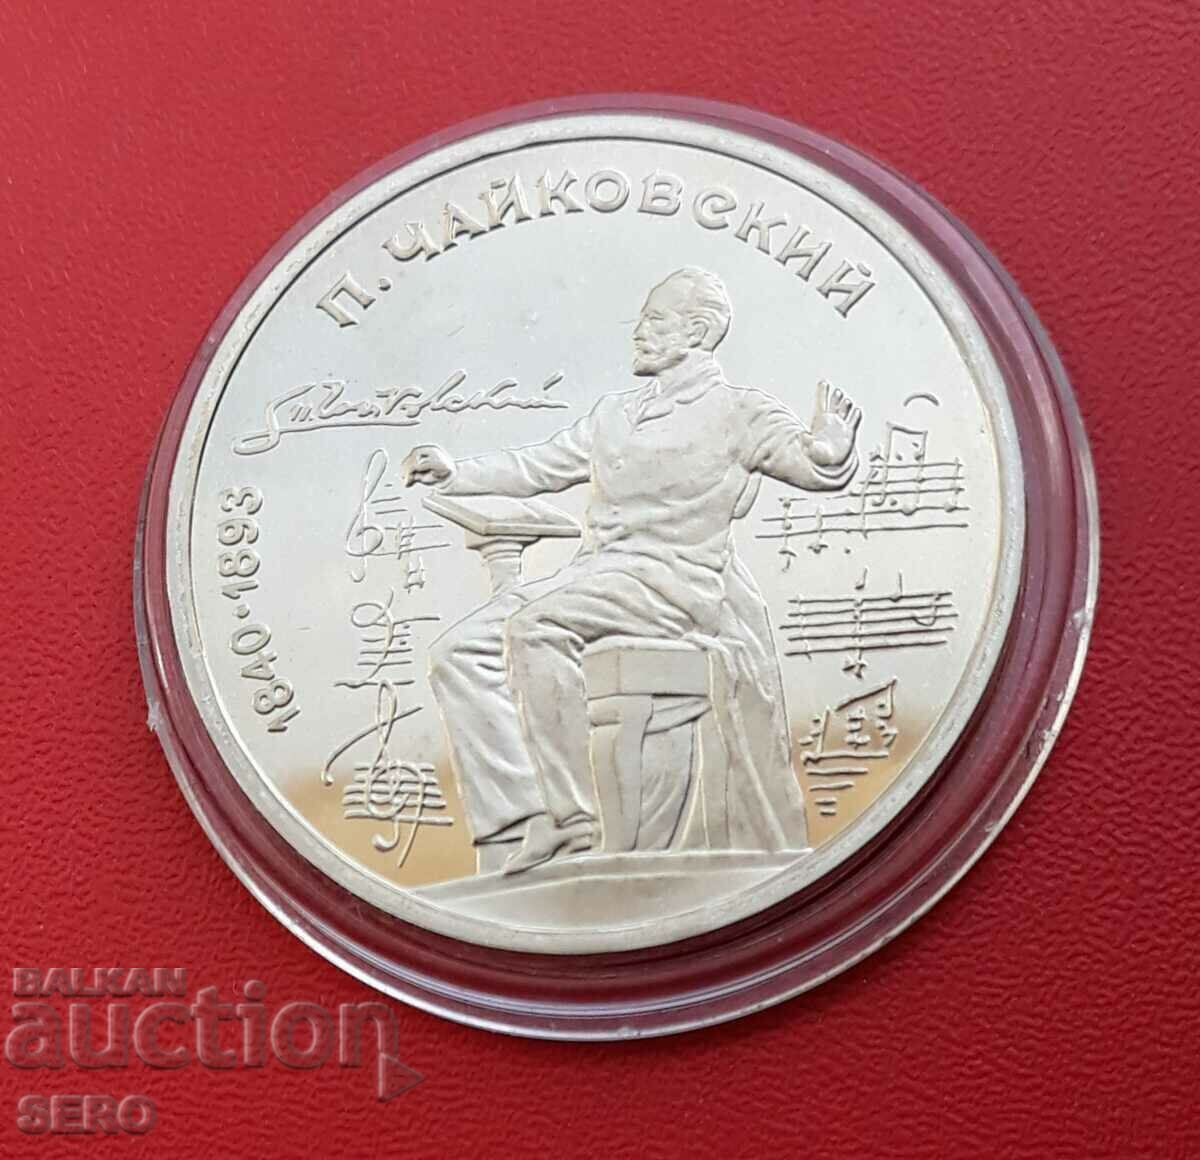 Rusia-URSS-1 rubla 1990-Ceaikovski-mat-lucius